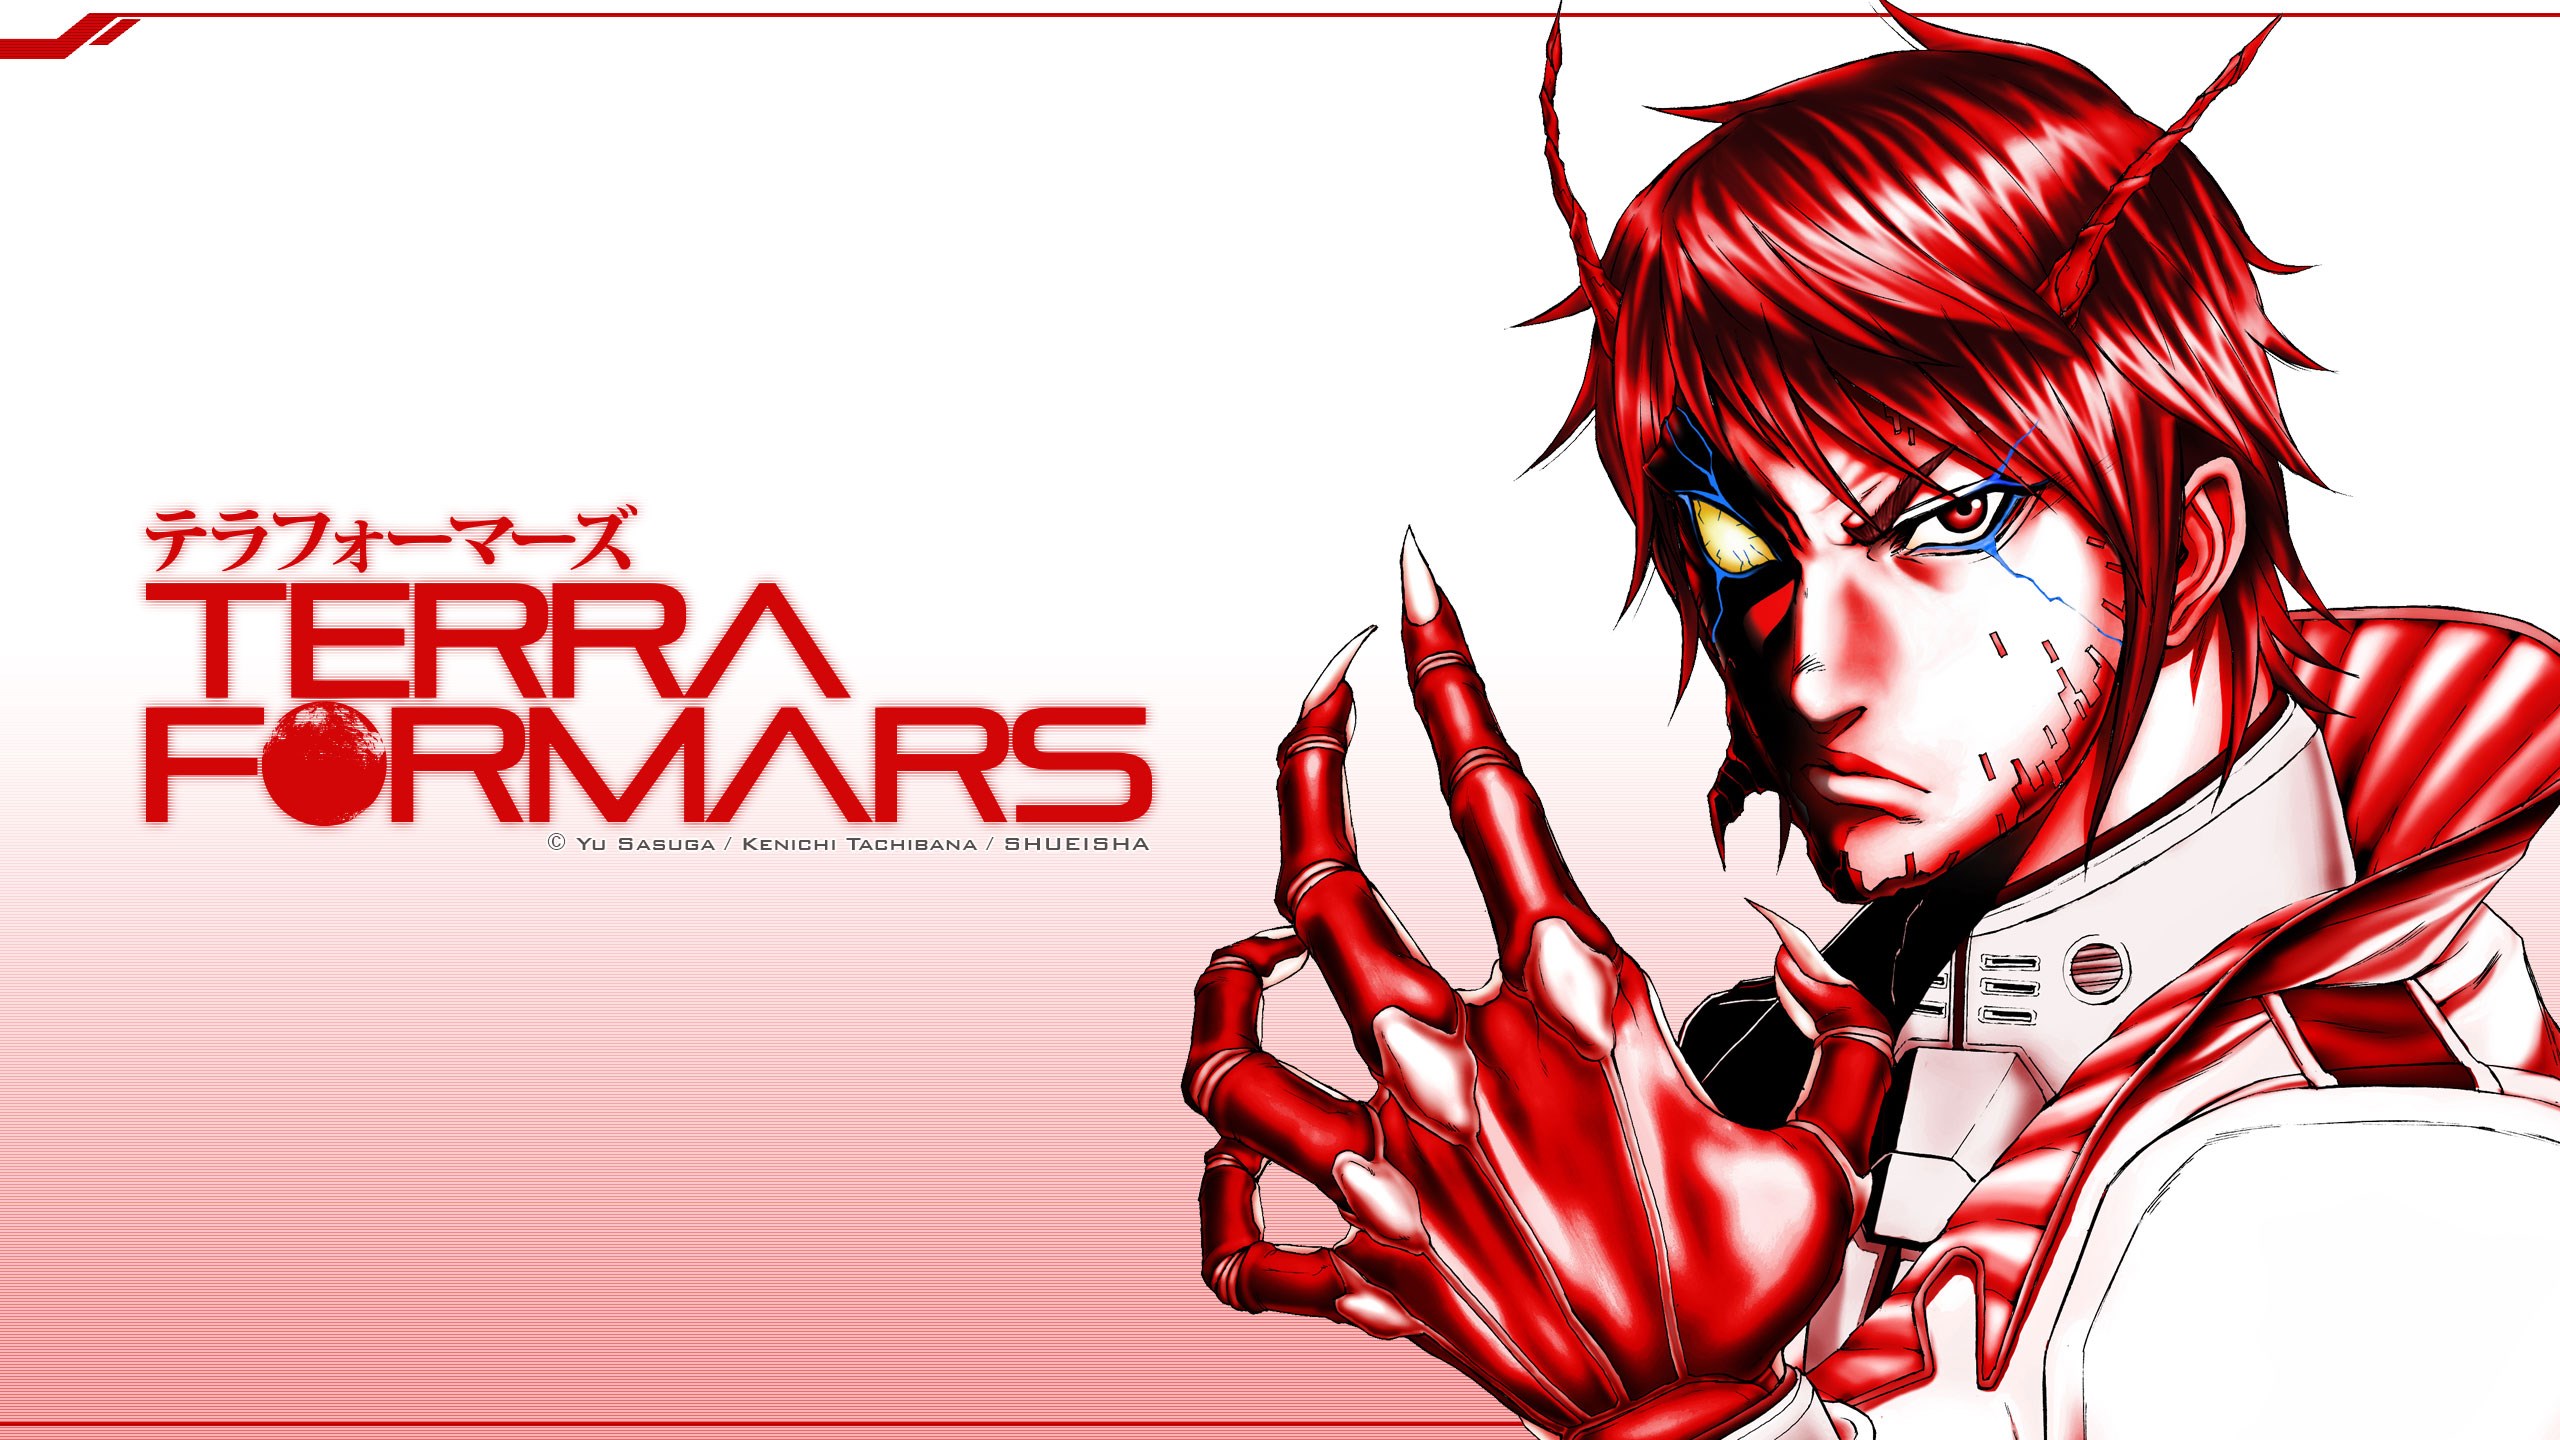 Hdq Images Terra Formars - Terra Formars Manga Cover , HD Wallpaper & Backgrounds